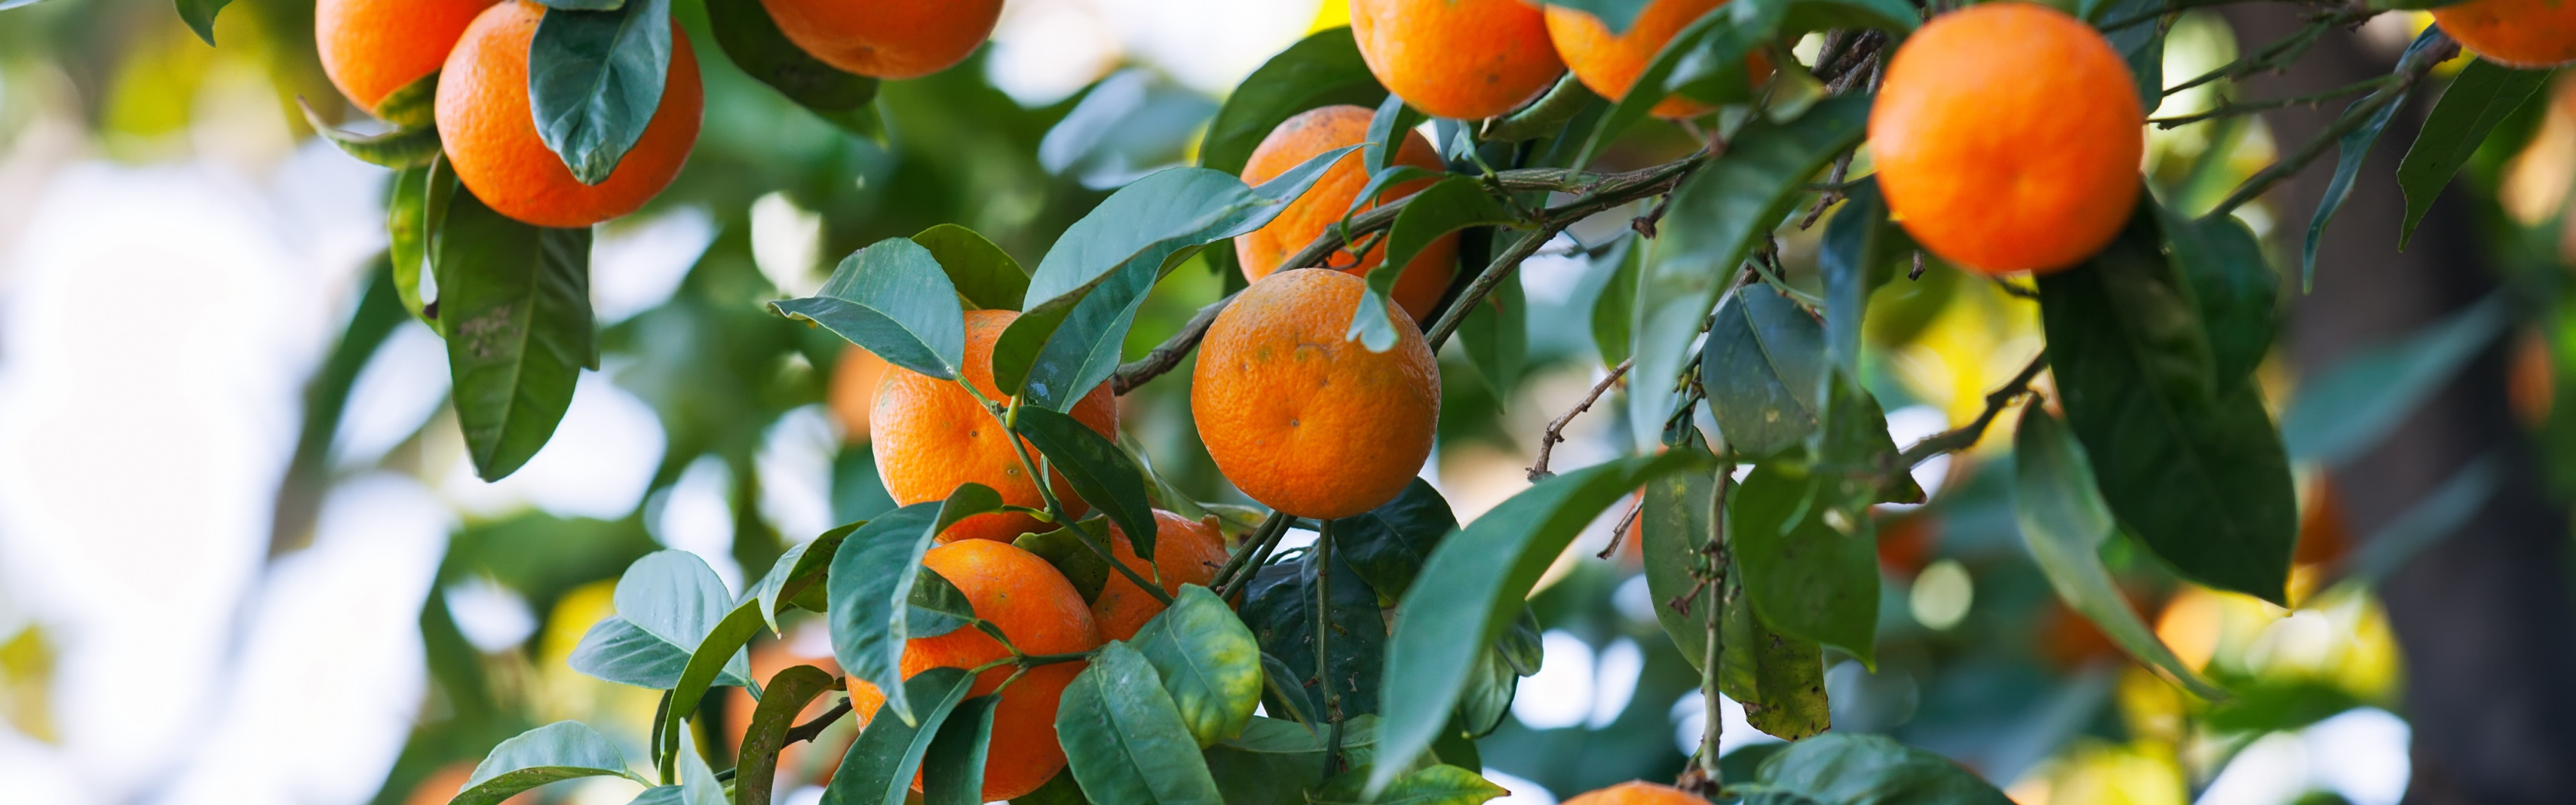 На дереве висят мандарины. Плодоножка у мандарина. Мандарины на ветке. Мандарин дерево. Апельсин на ветке.